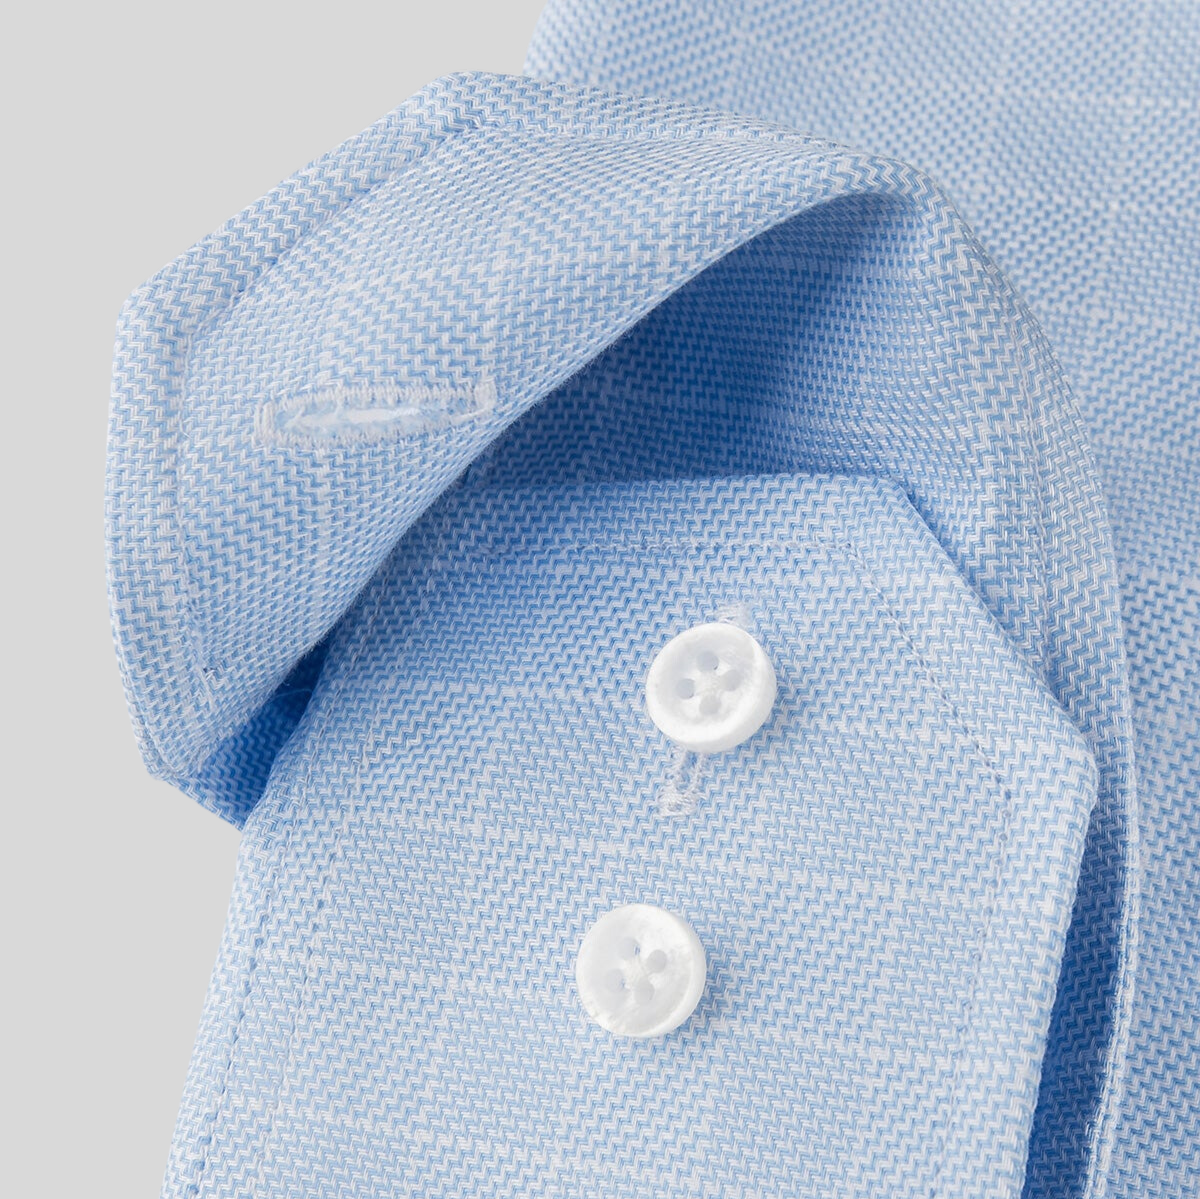 Gotstyle Fashion - Oscar Of Sweden Collar Shirts Micro Zig Zag Checks Shirt - Light Blue